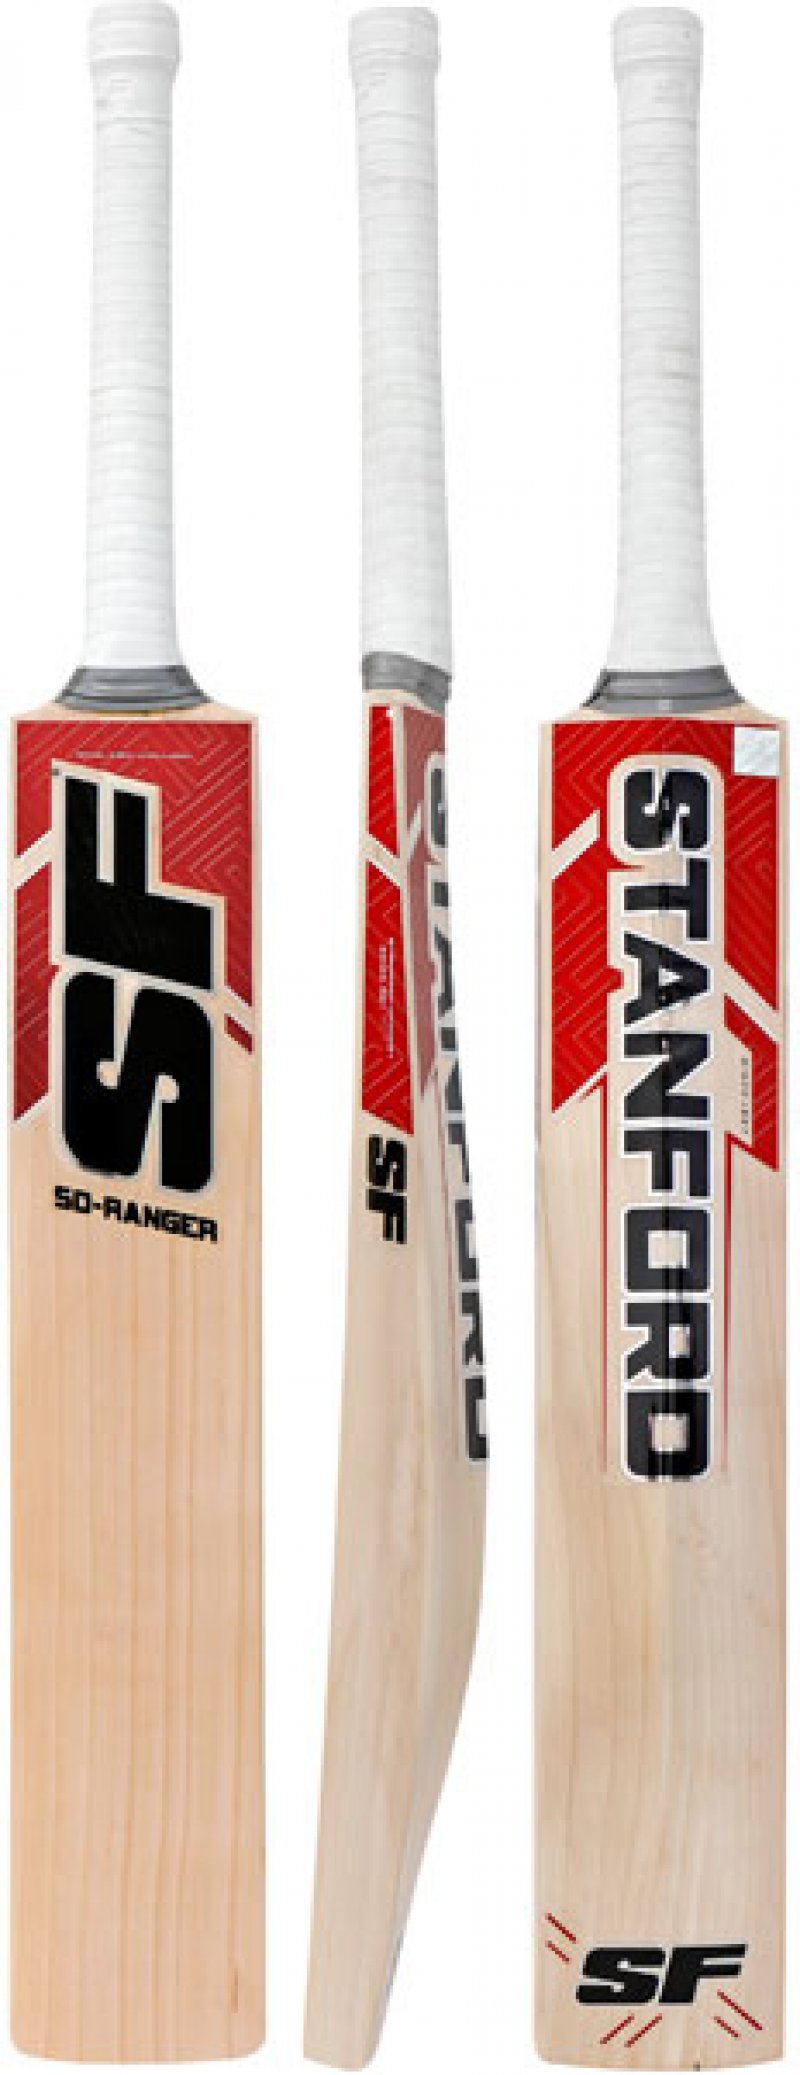 SF Stanford SD Ranger Junior Cricket Bat